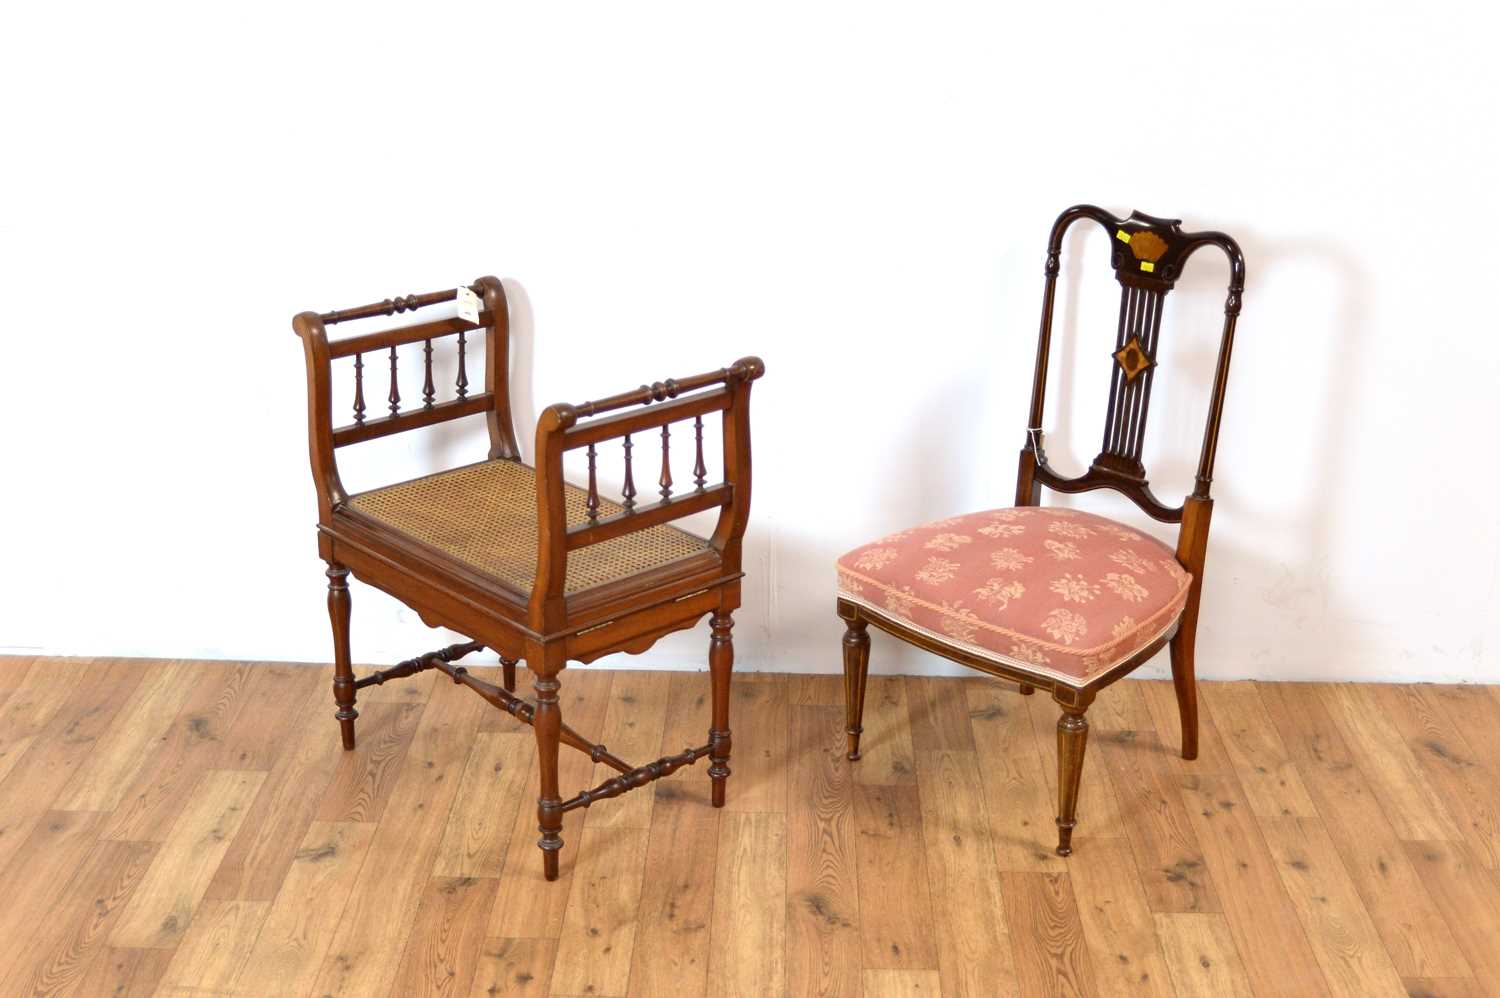 An Edwardian mahogany salon chair with twin handled rattan stool - Image 2 of 4